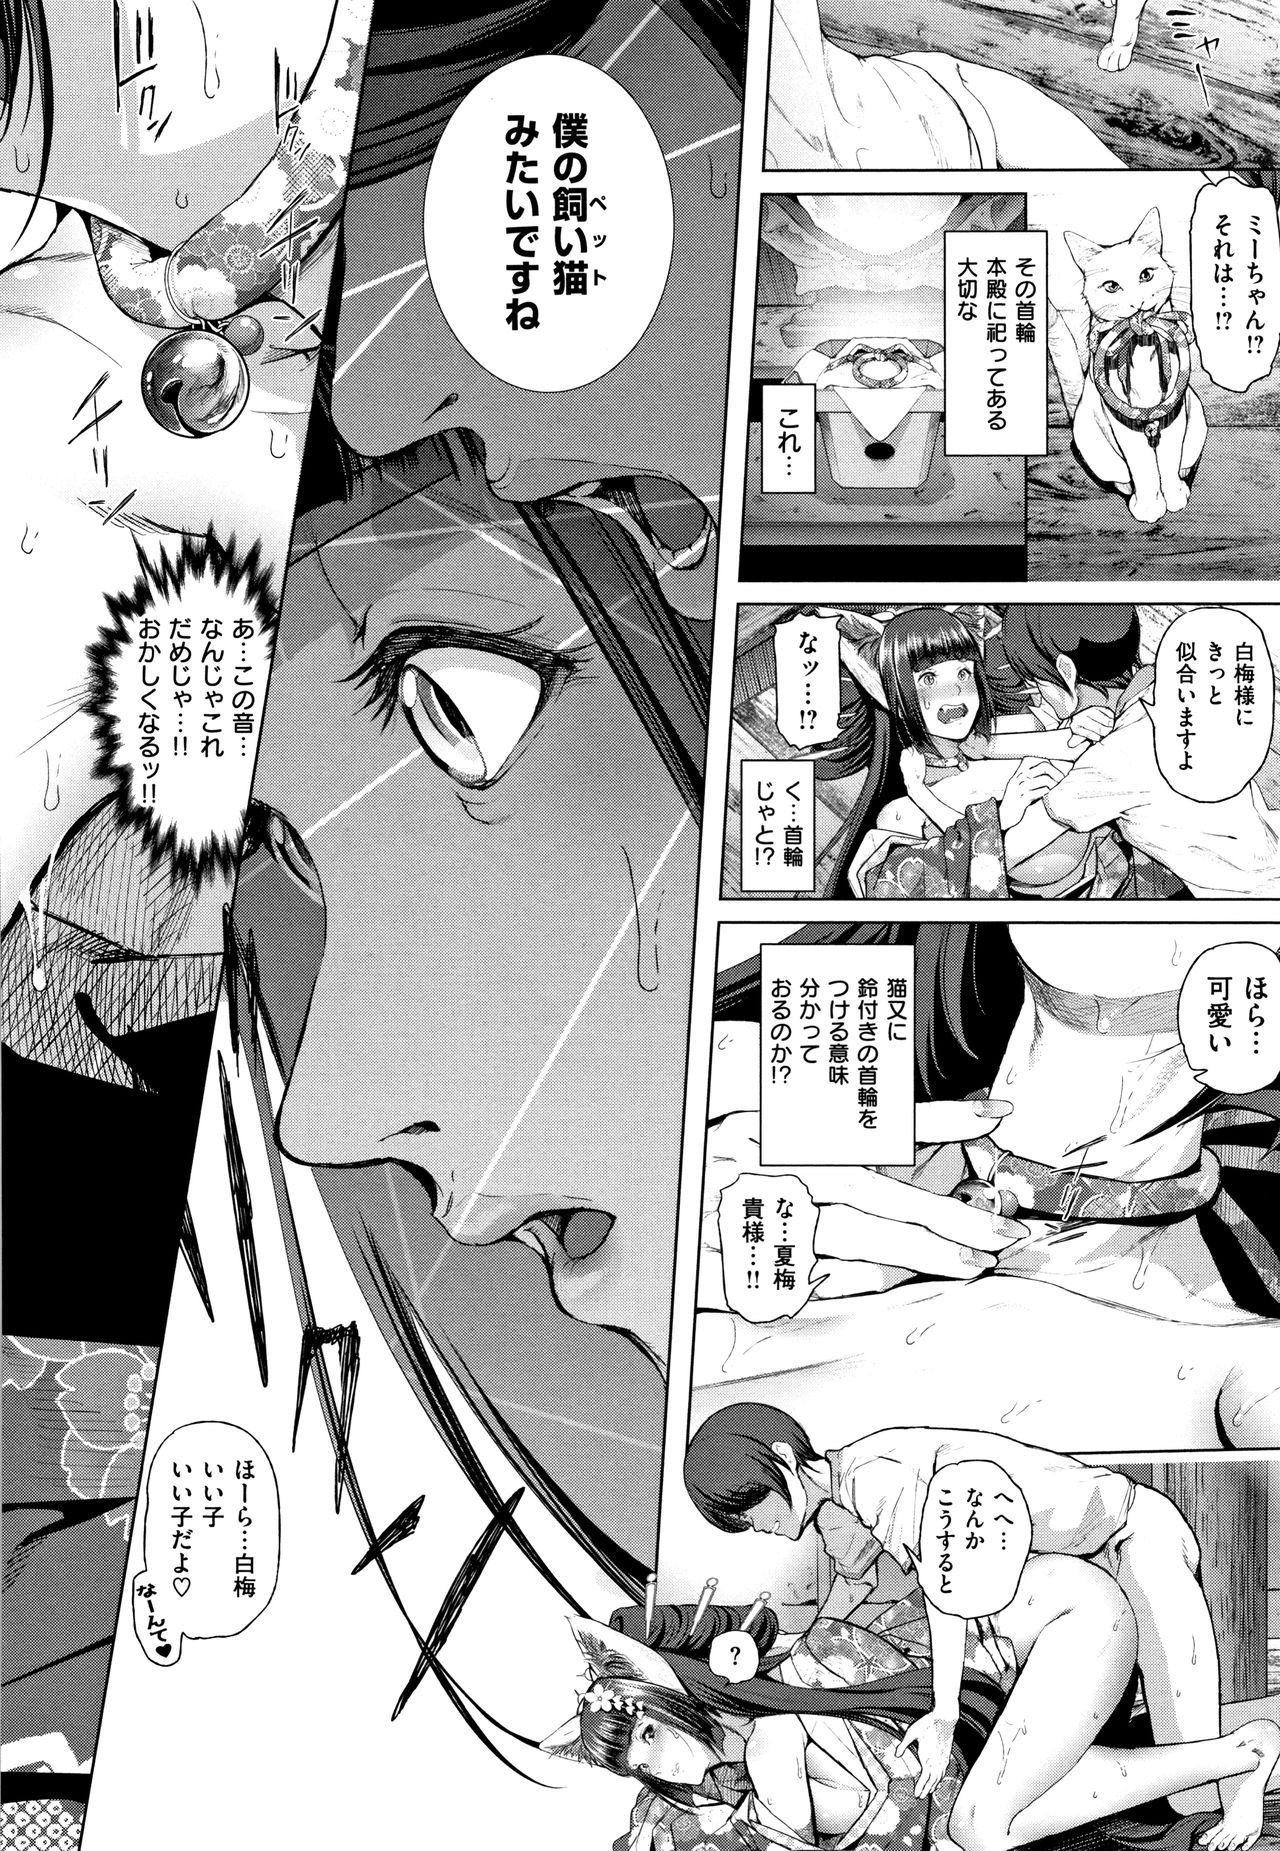 [Suzuhane Suzu] Cos wa Midara na Kamen Shogyouban - Cosplay is a mask [wakes up erotic personality...] 108